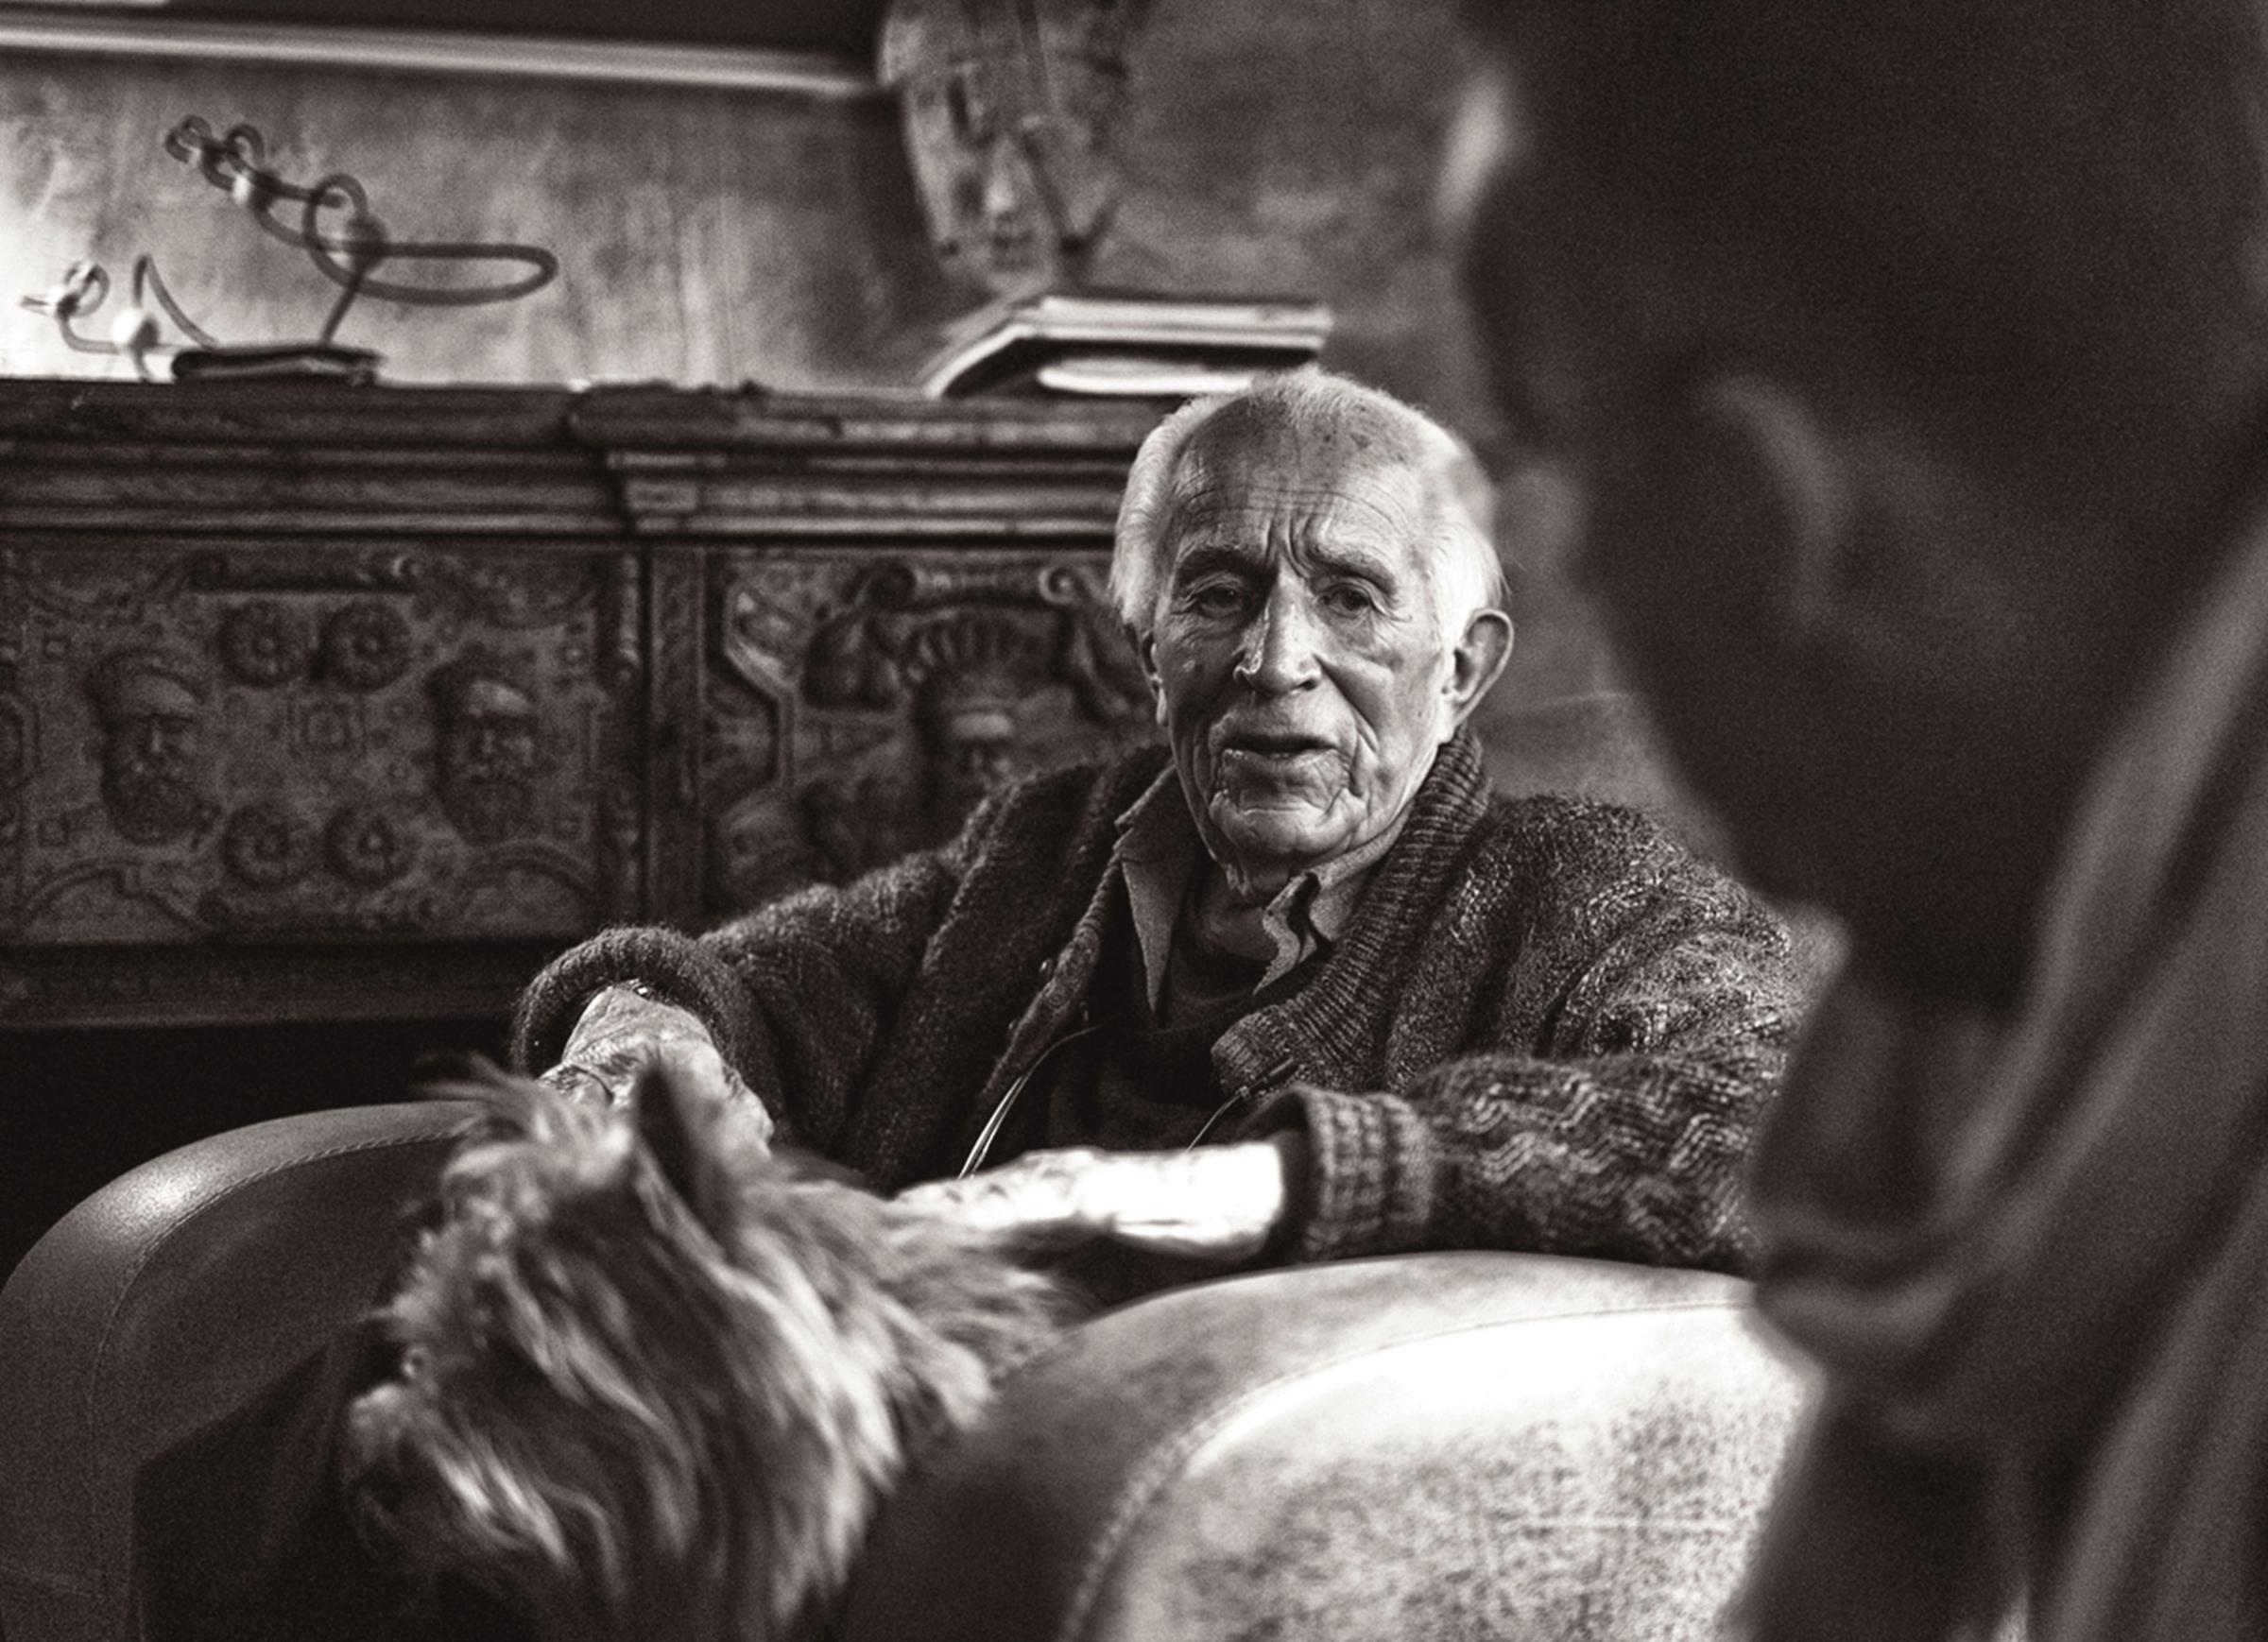 Photographer David Douglas Duncan on his 98th birthday. January 28, 2014, Casteraras le Vieux, France.